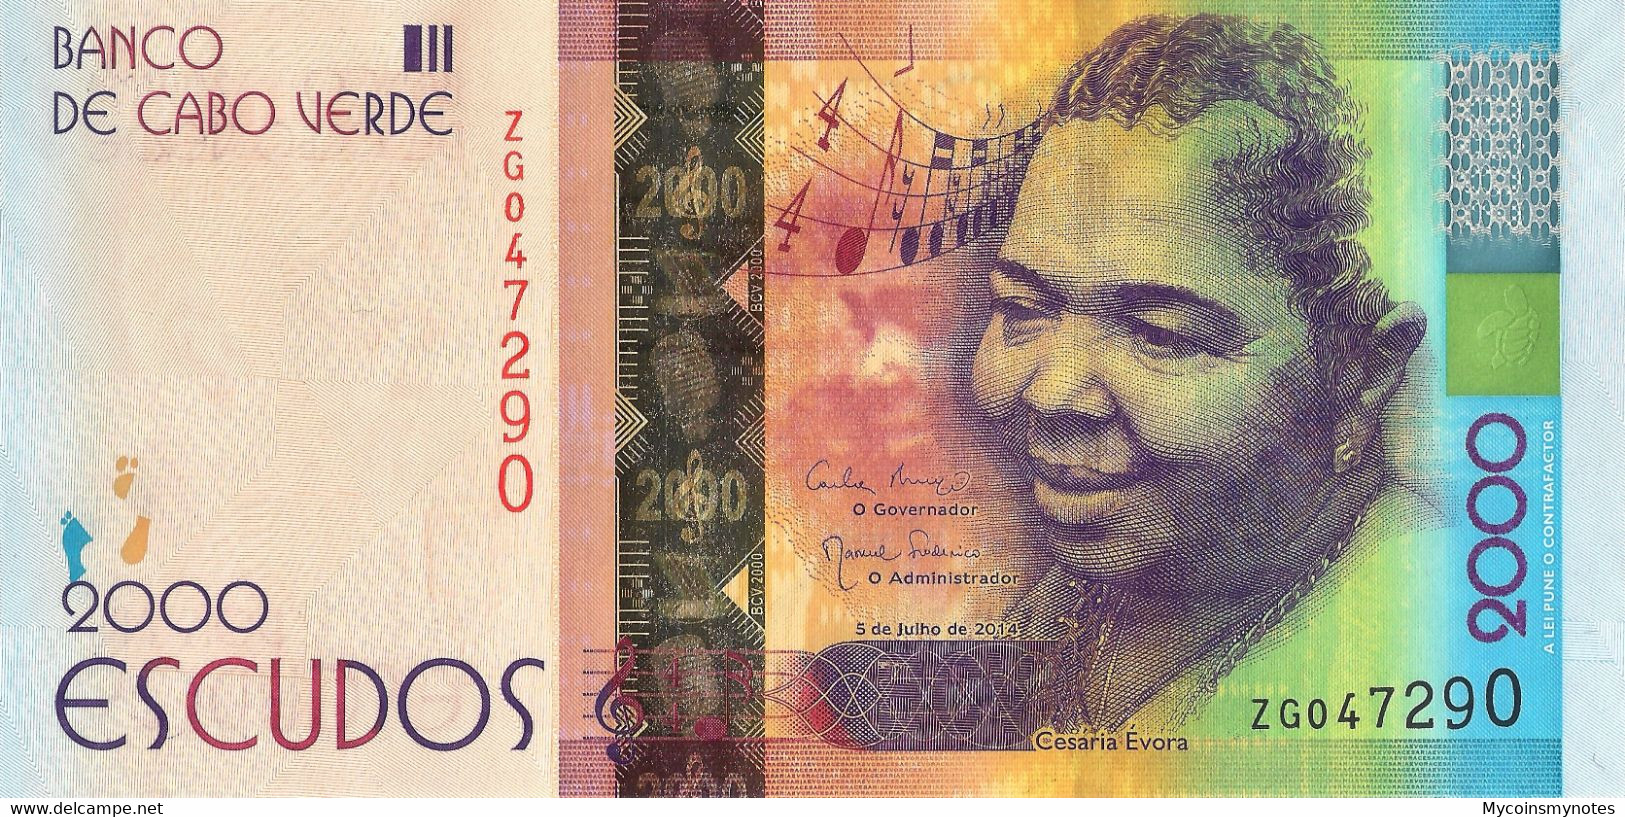 CAPE VERDE 2000 Escudos From 2014, P74, "Z" Replacement Banknote, UNC - Kaapverdische Eilanden